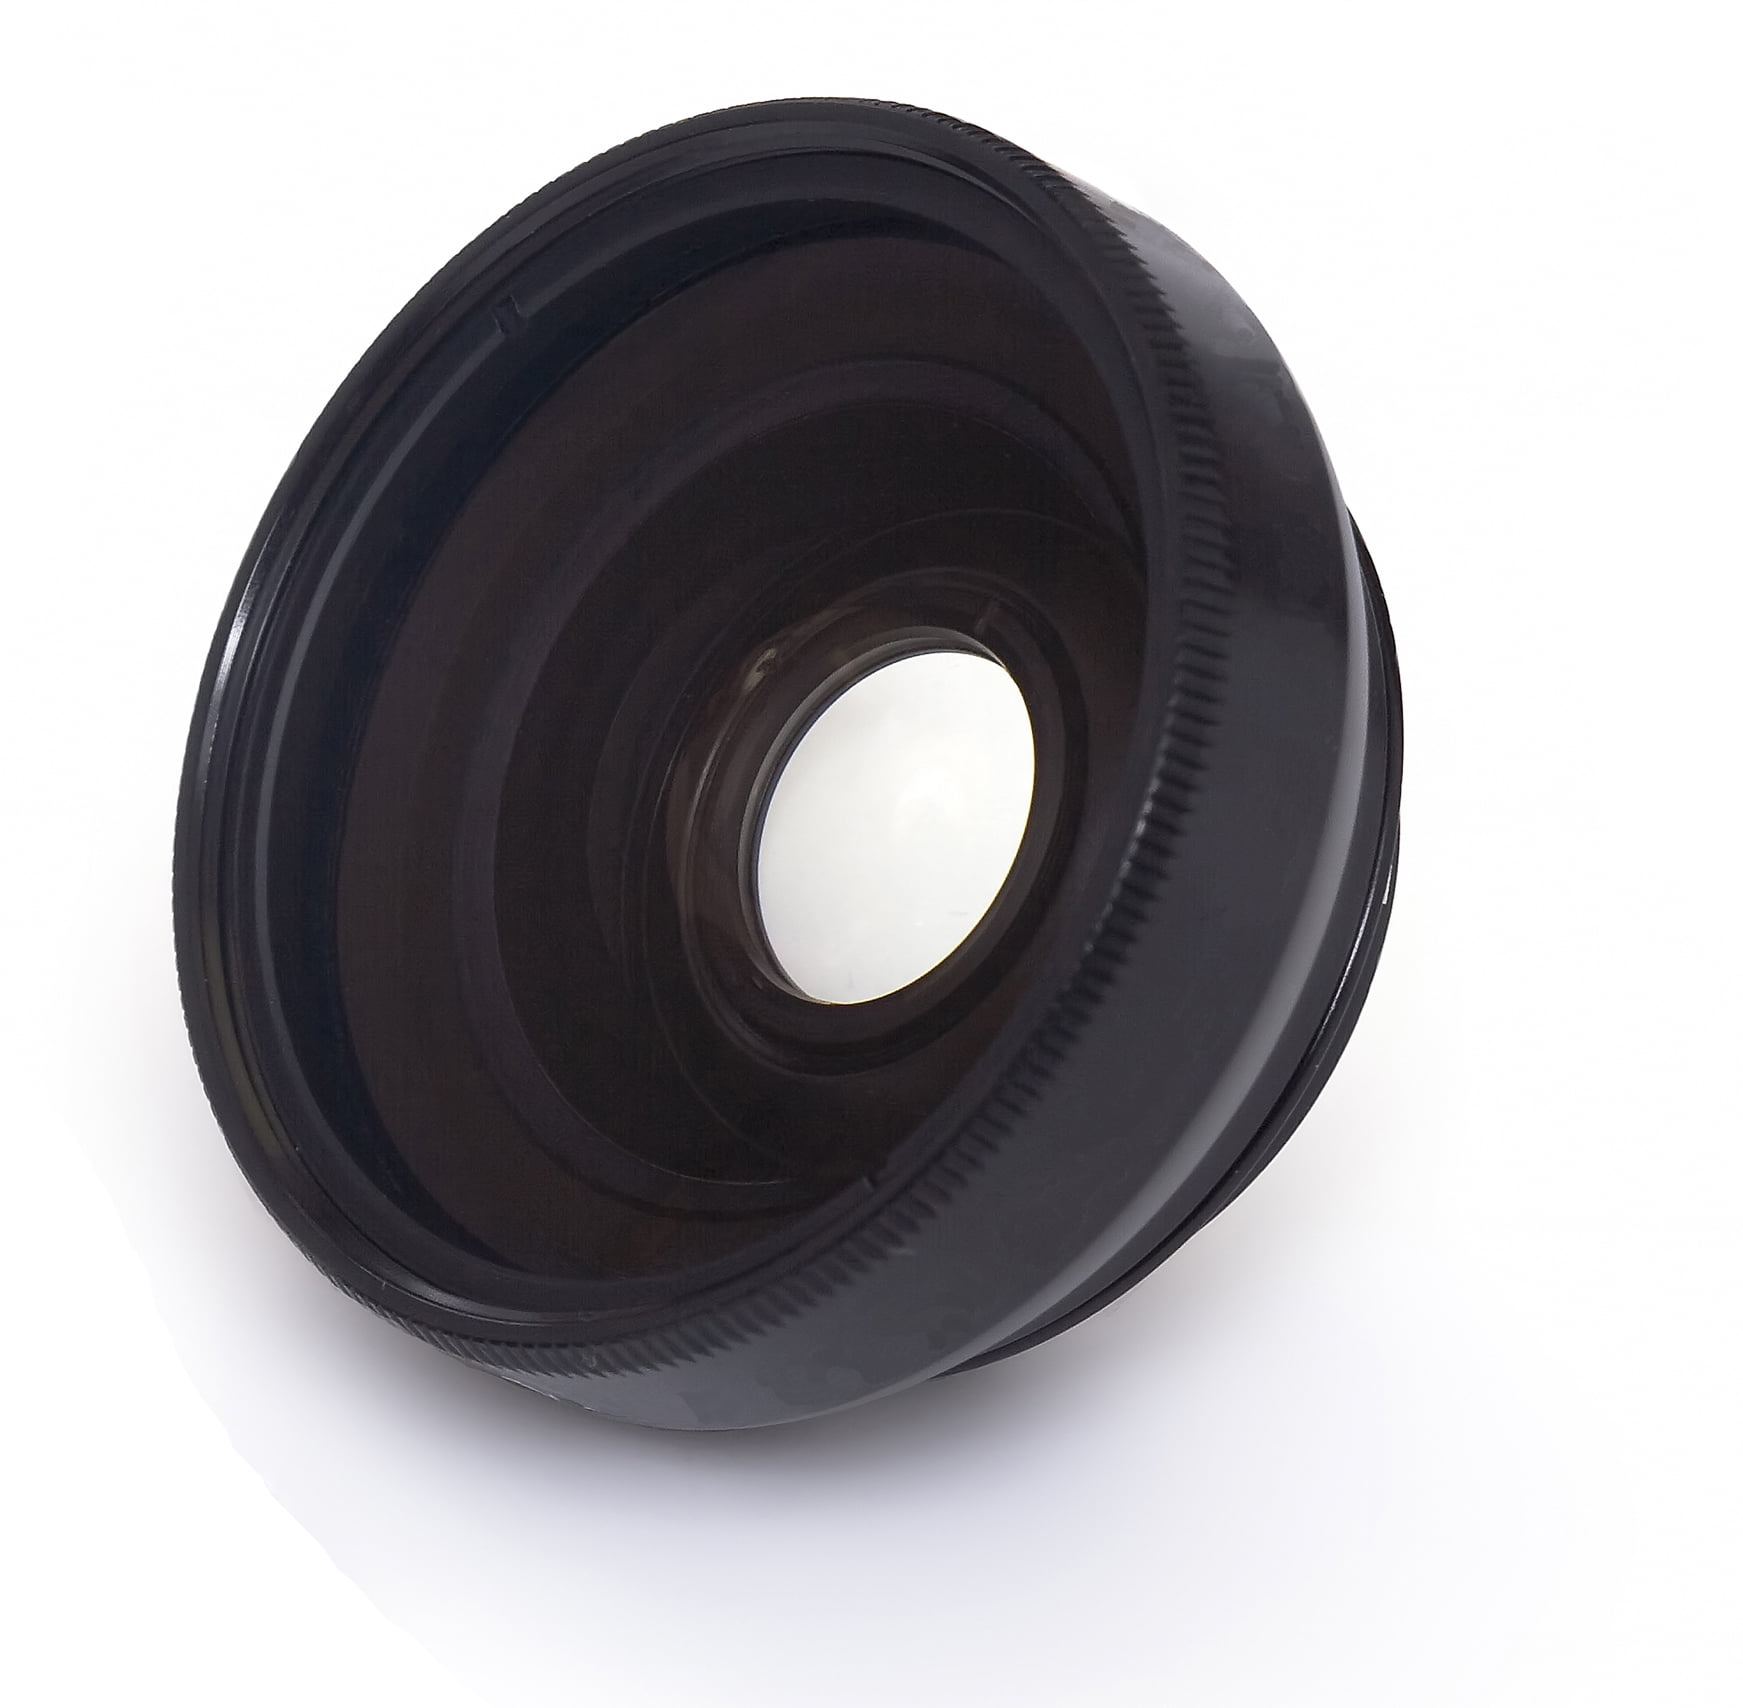 Bower 30-37mm Digital Wide Angle Lens for Sony Handycam camcorder Black 